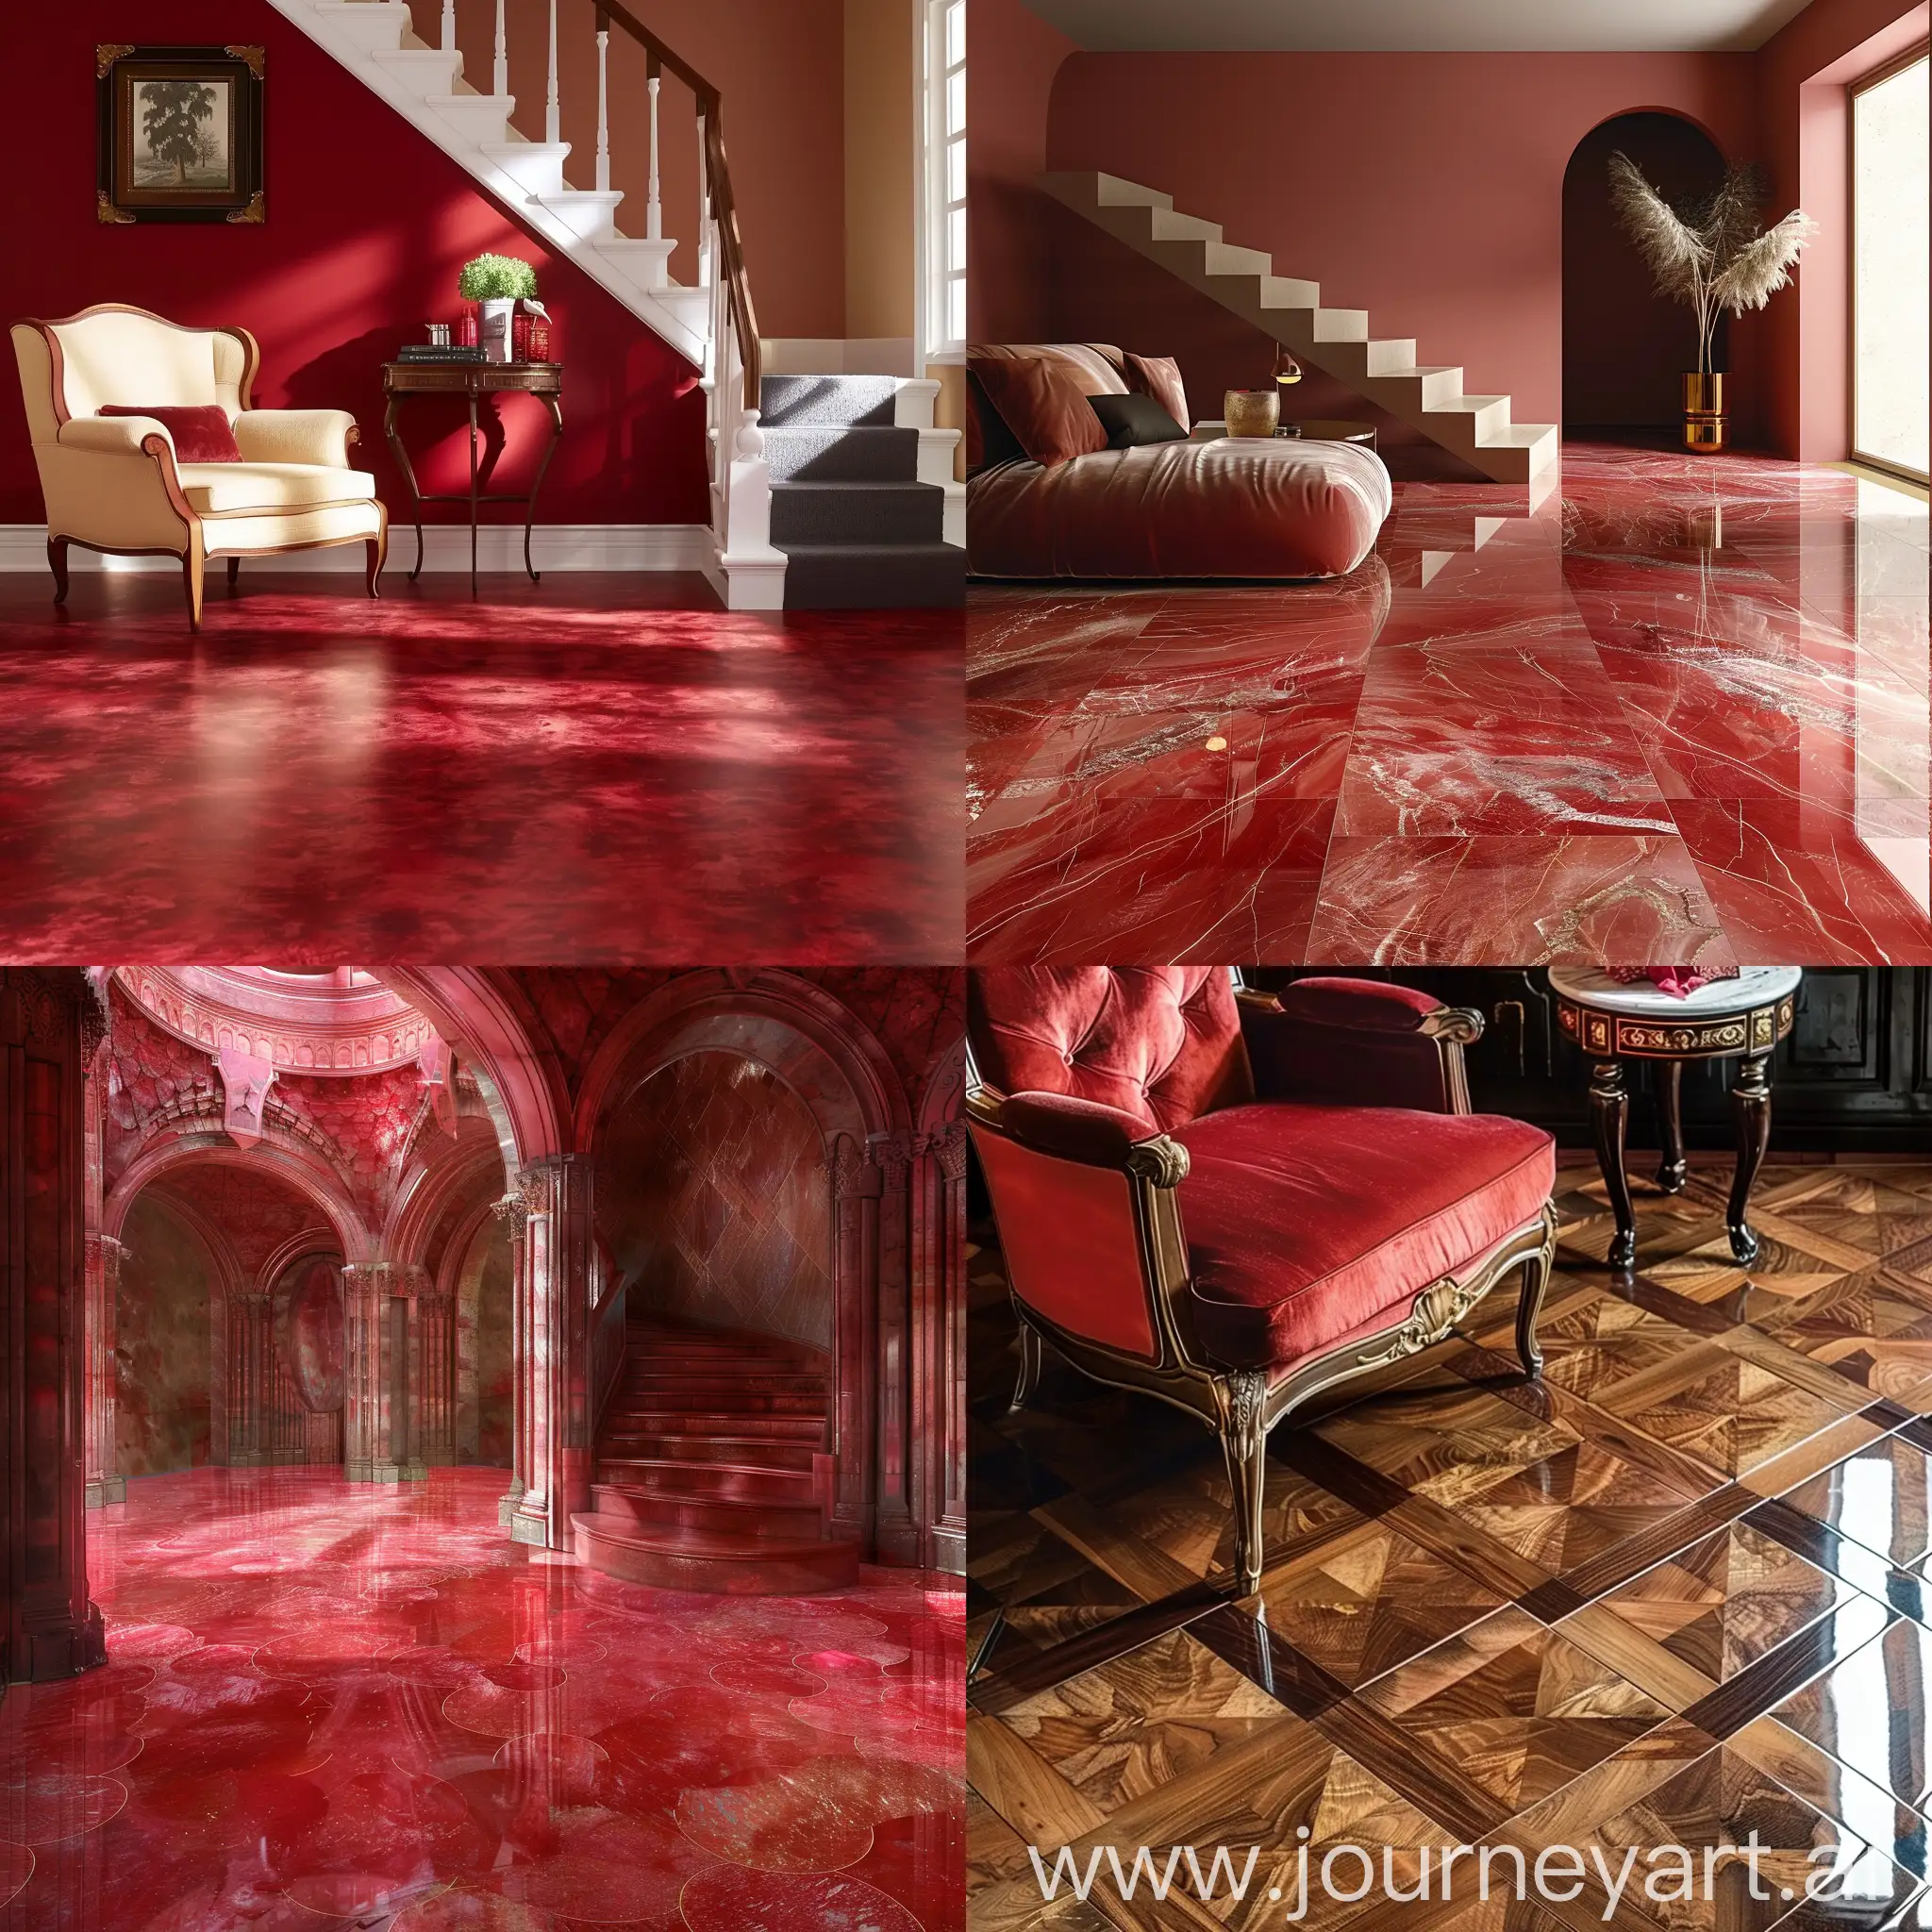 Vibrant-Ruby-Gem-on-a-Polished-Floor